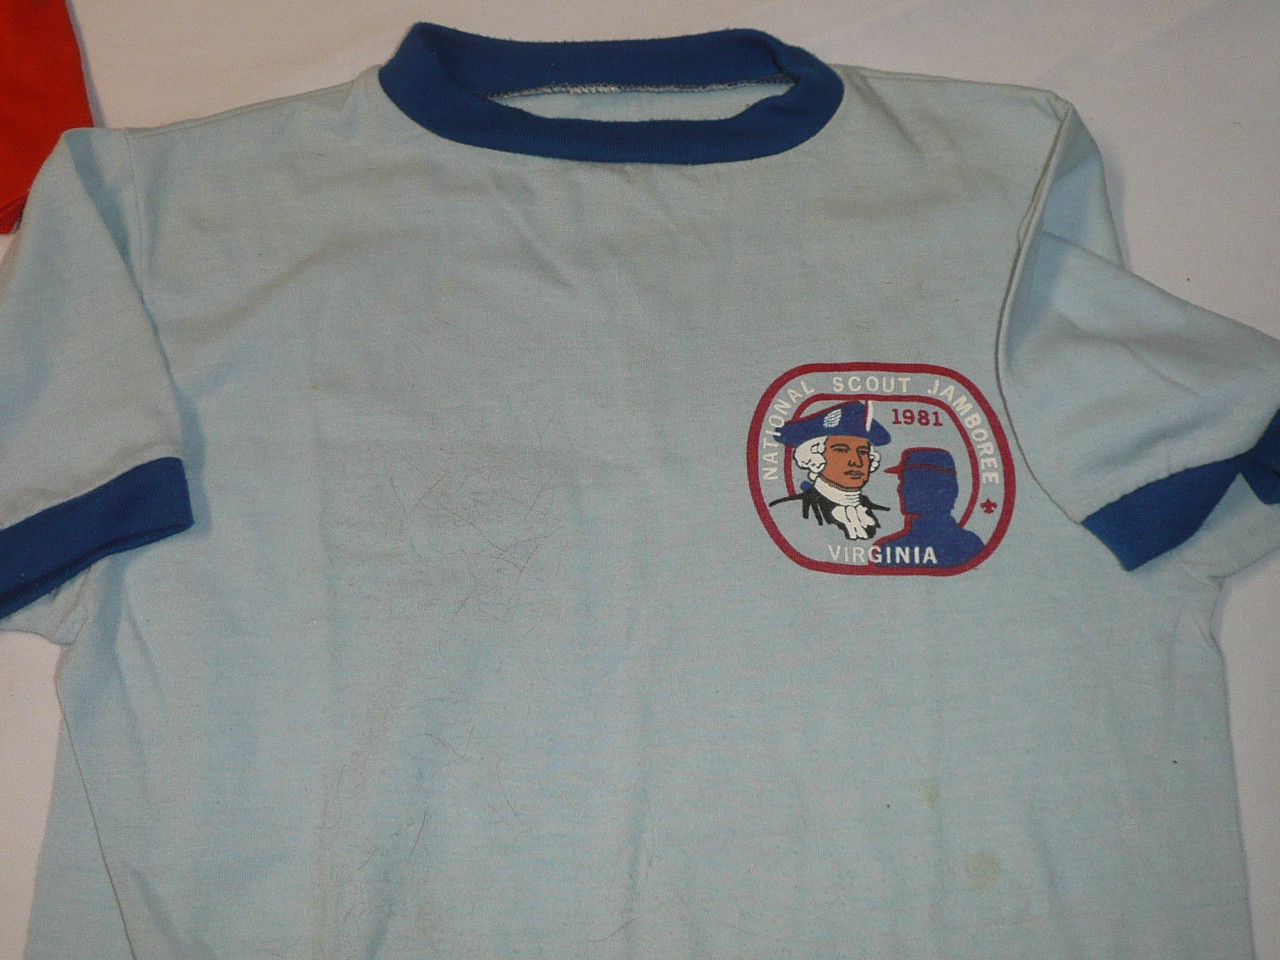 1981 National Jamboree Tee Shirt, Adult XL, used